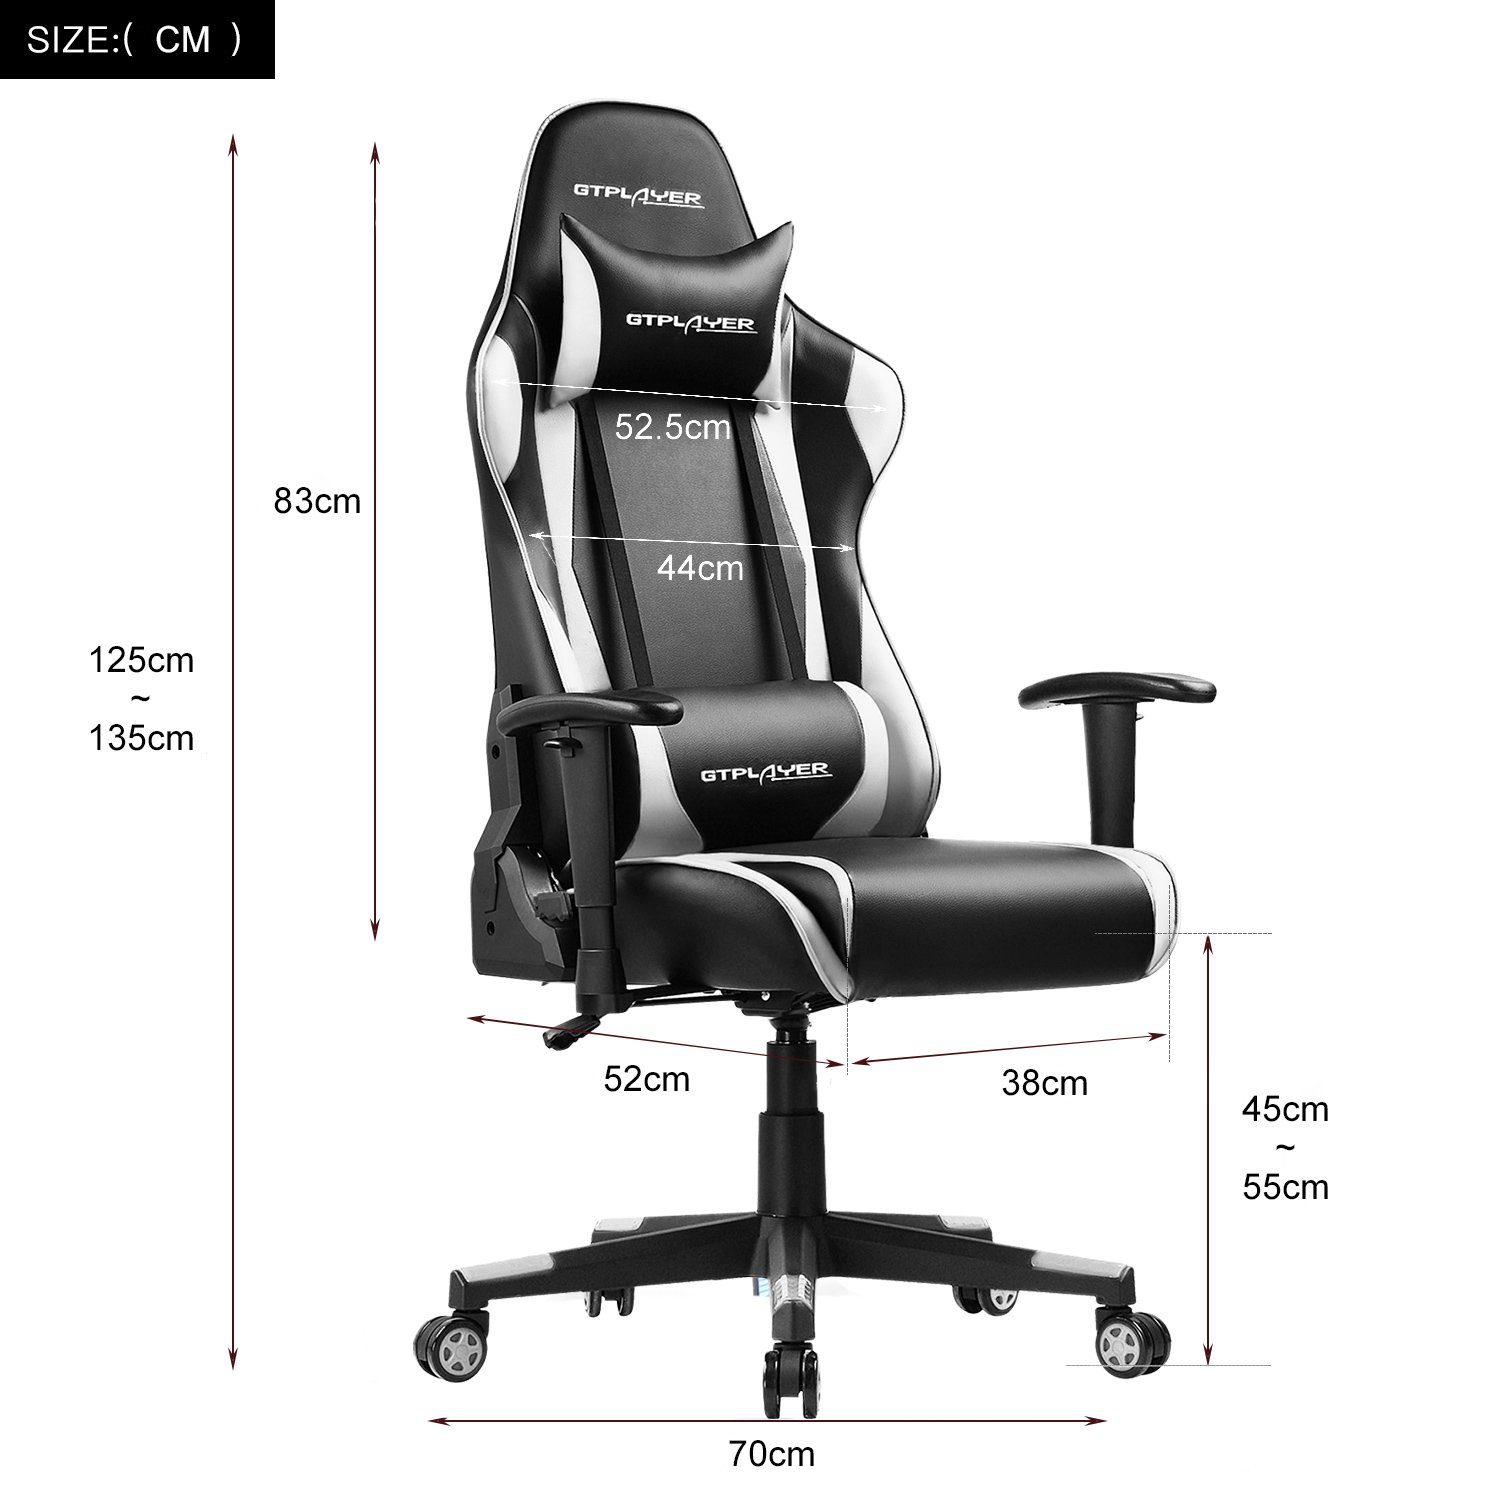 90°-165° Bürostuhl Gaming 150 Gamer bis Stuhl, kg belastbar, ergonomischer Stuhl Neigungswinkel Gaming-Stuhl Sessel Gaming GTPLAYER weiß